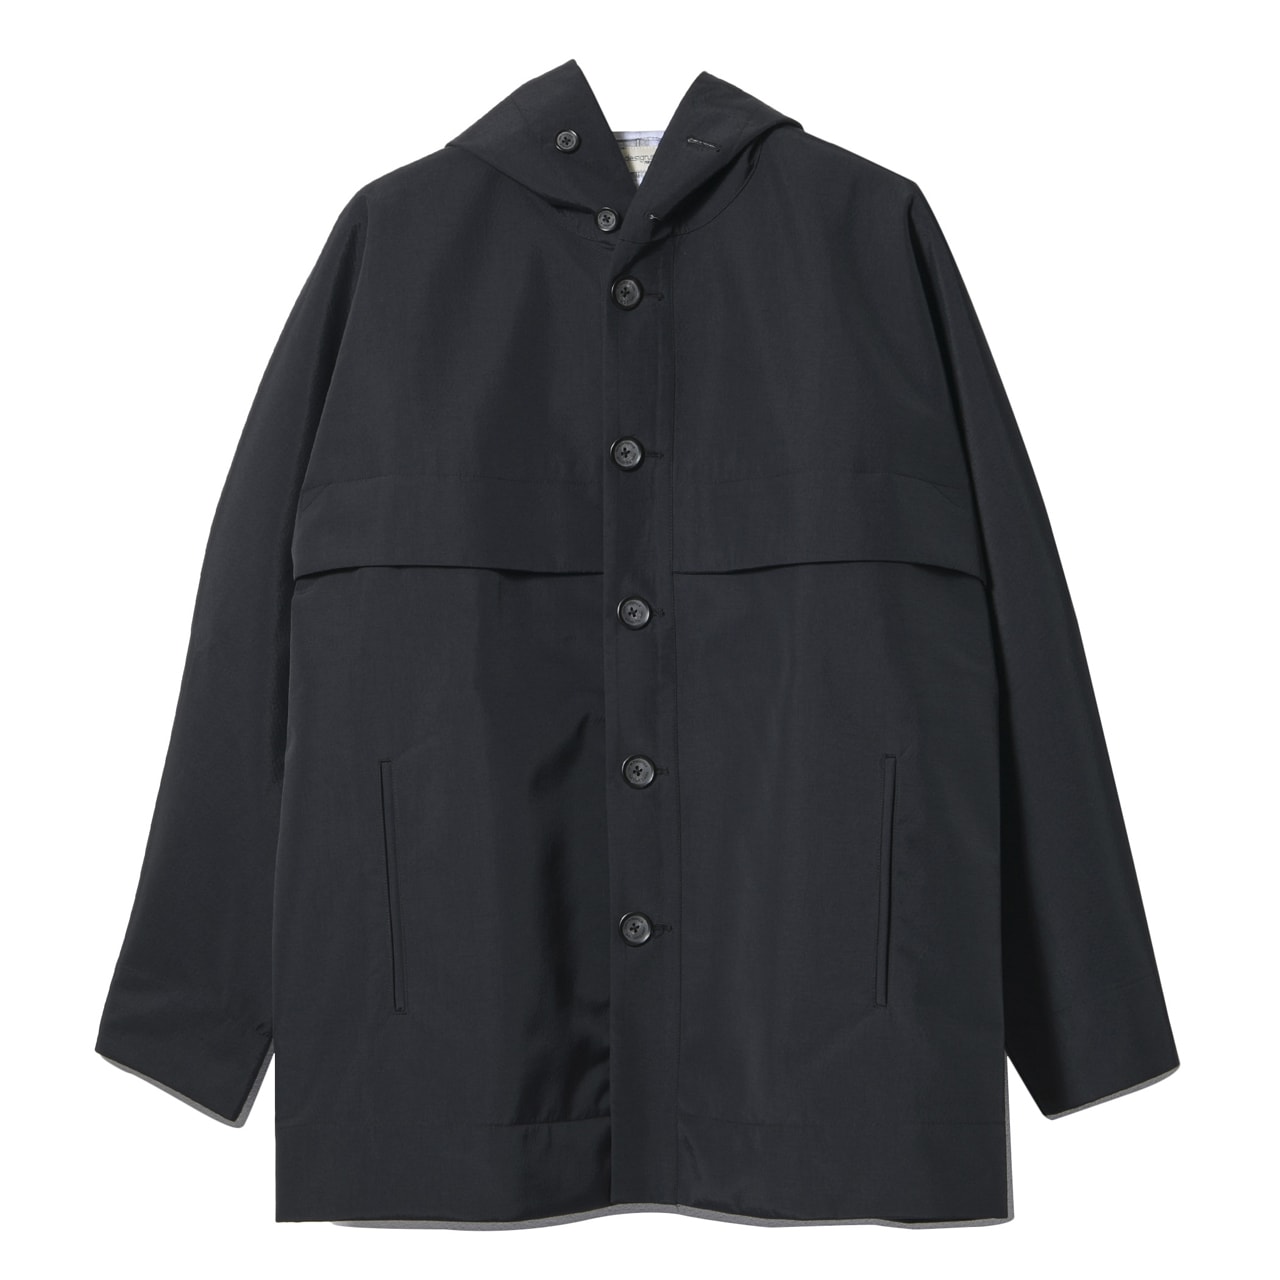 OVERCOAT x New Balance Tokyo Design Studio Collaboration sneaker release date info buy rc_1300 coat jacket clothing november 6 kith dover street market tds